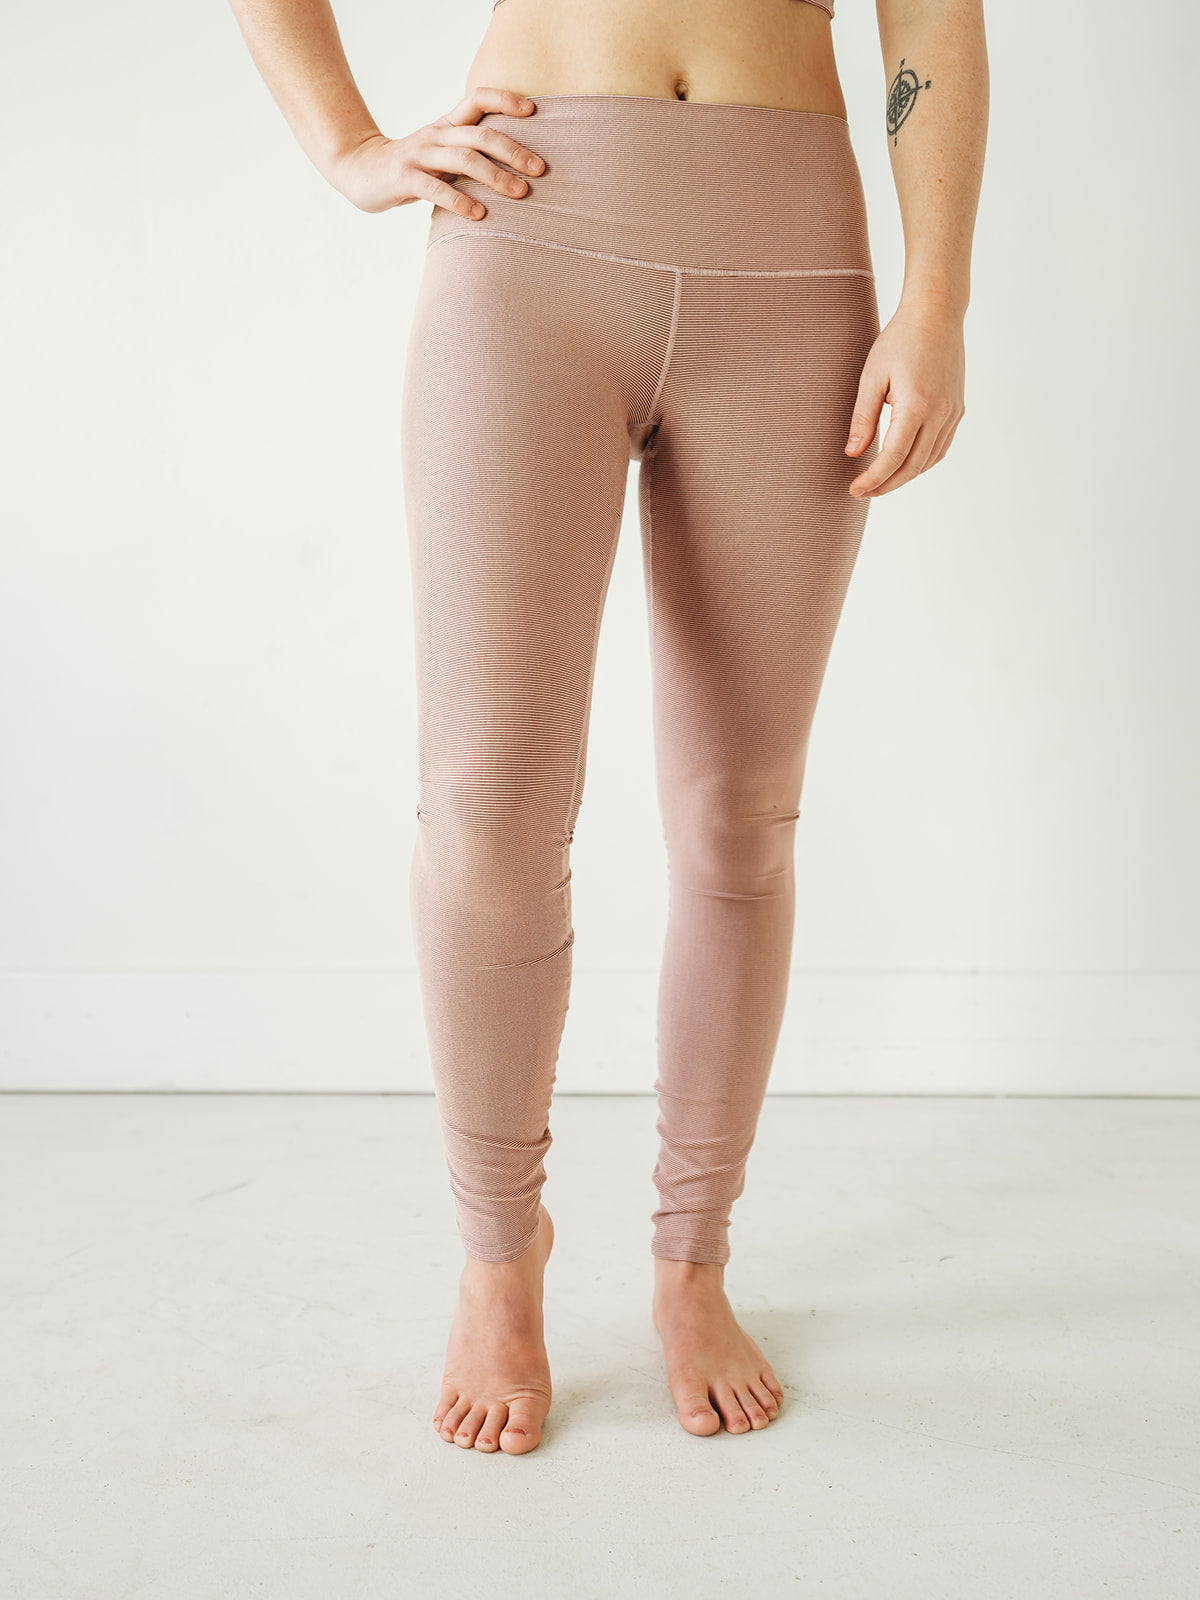 Colorado Threads Women's Blush Microstripe Yoga Pants - Colorado